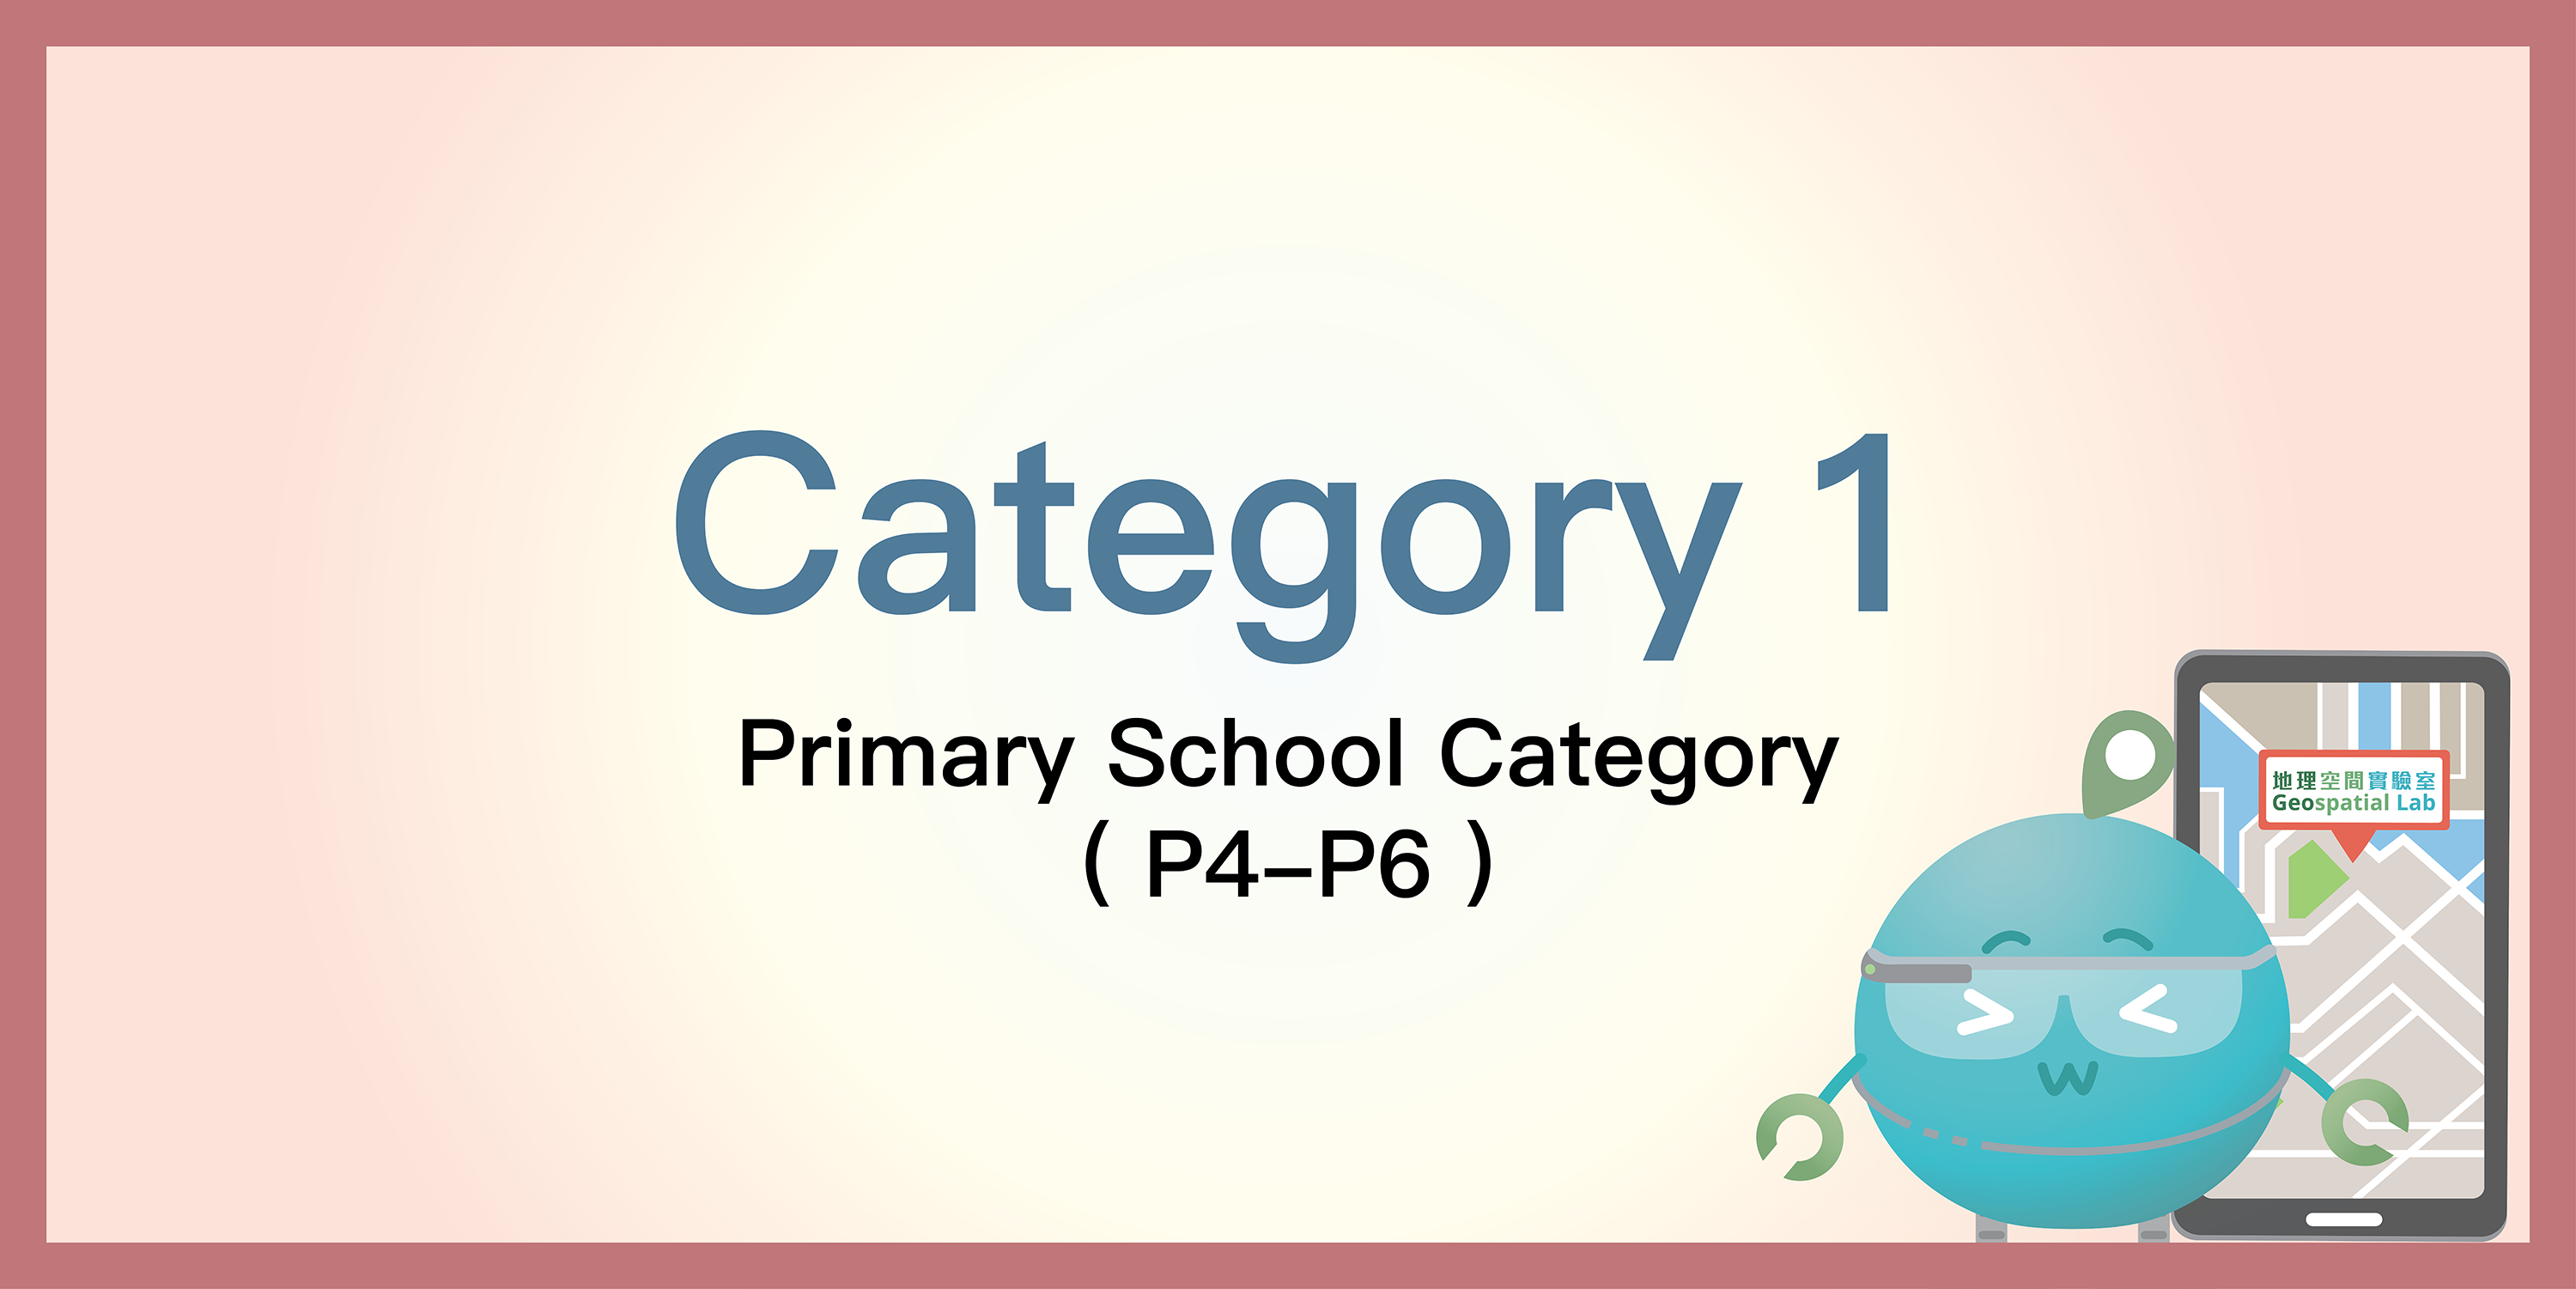 Primary School Category